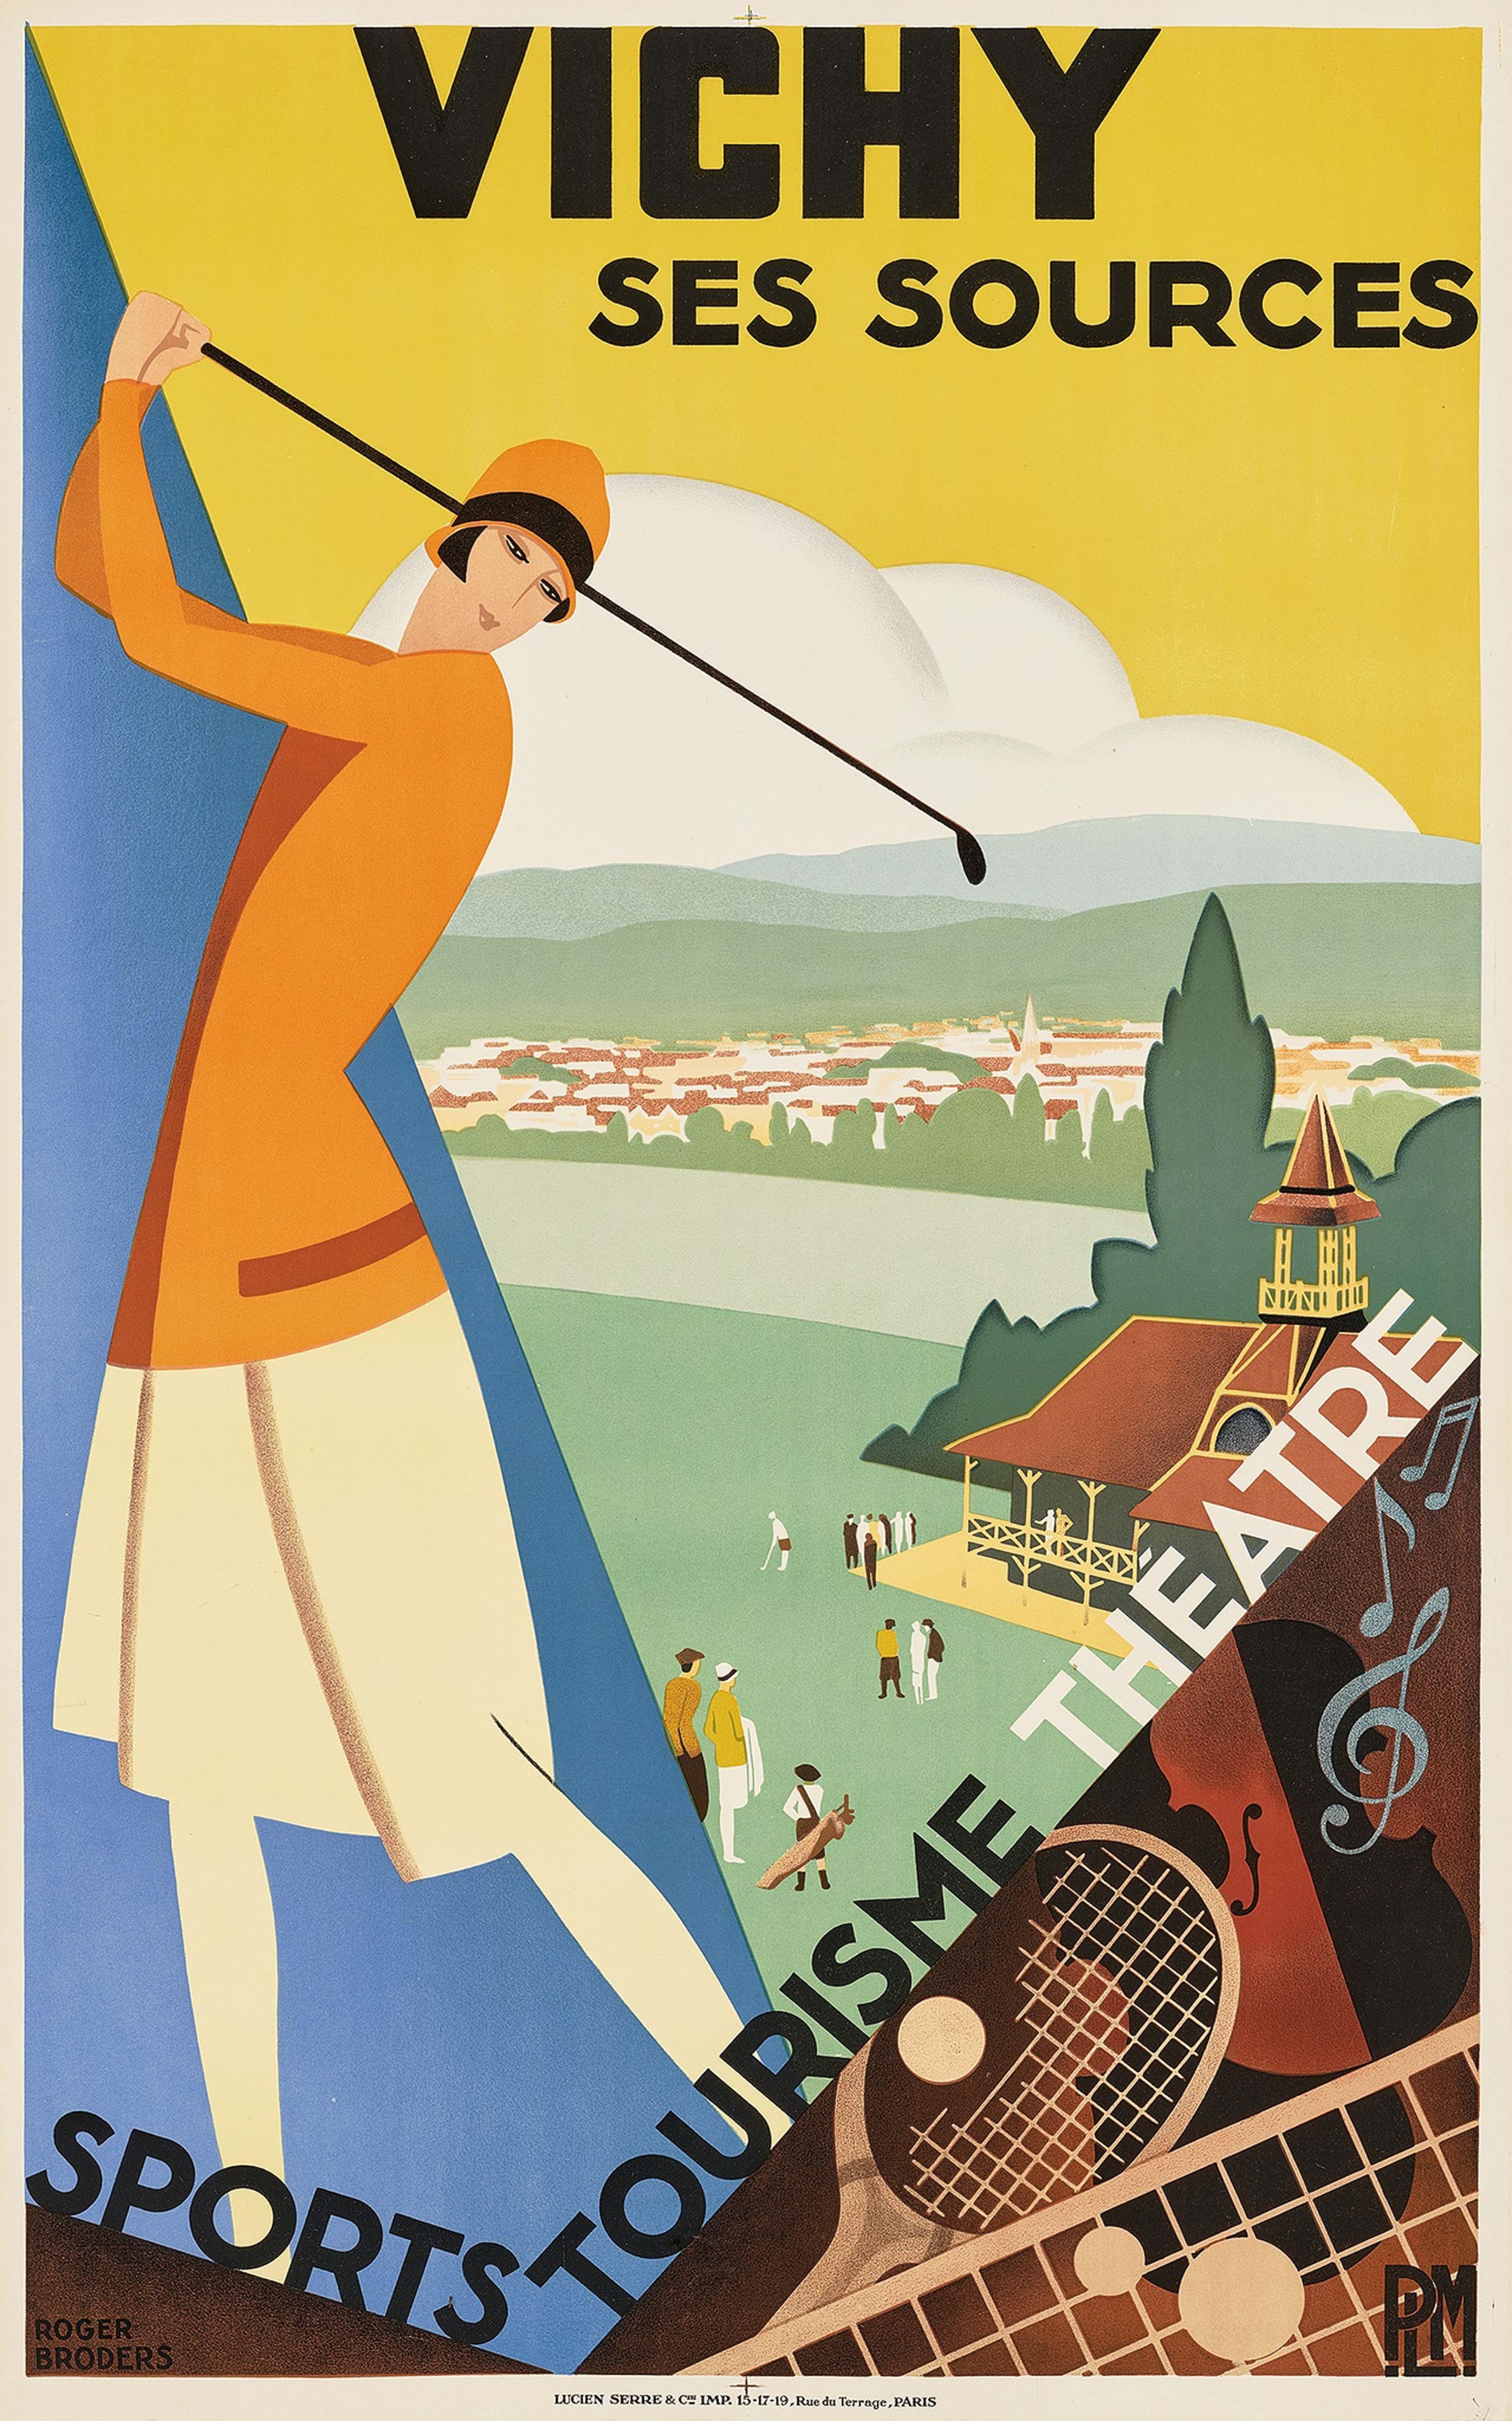 Print Roger Broders - Affiche vintage d'origine de voyage Vichy Golf, PLM Paris Lyon Mediterranee Railway